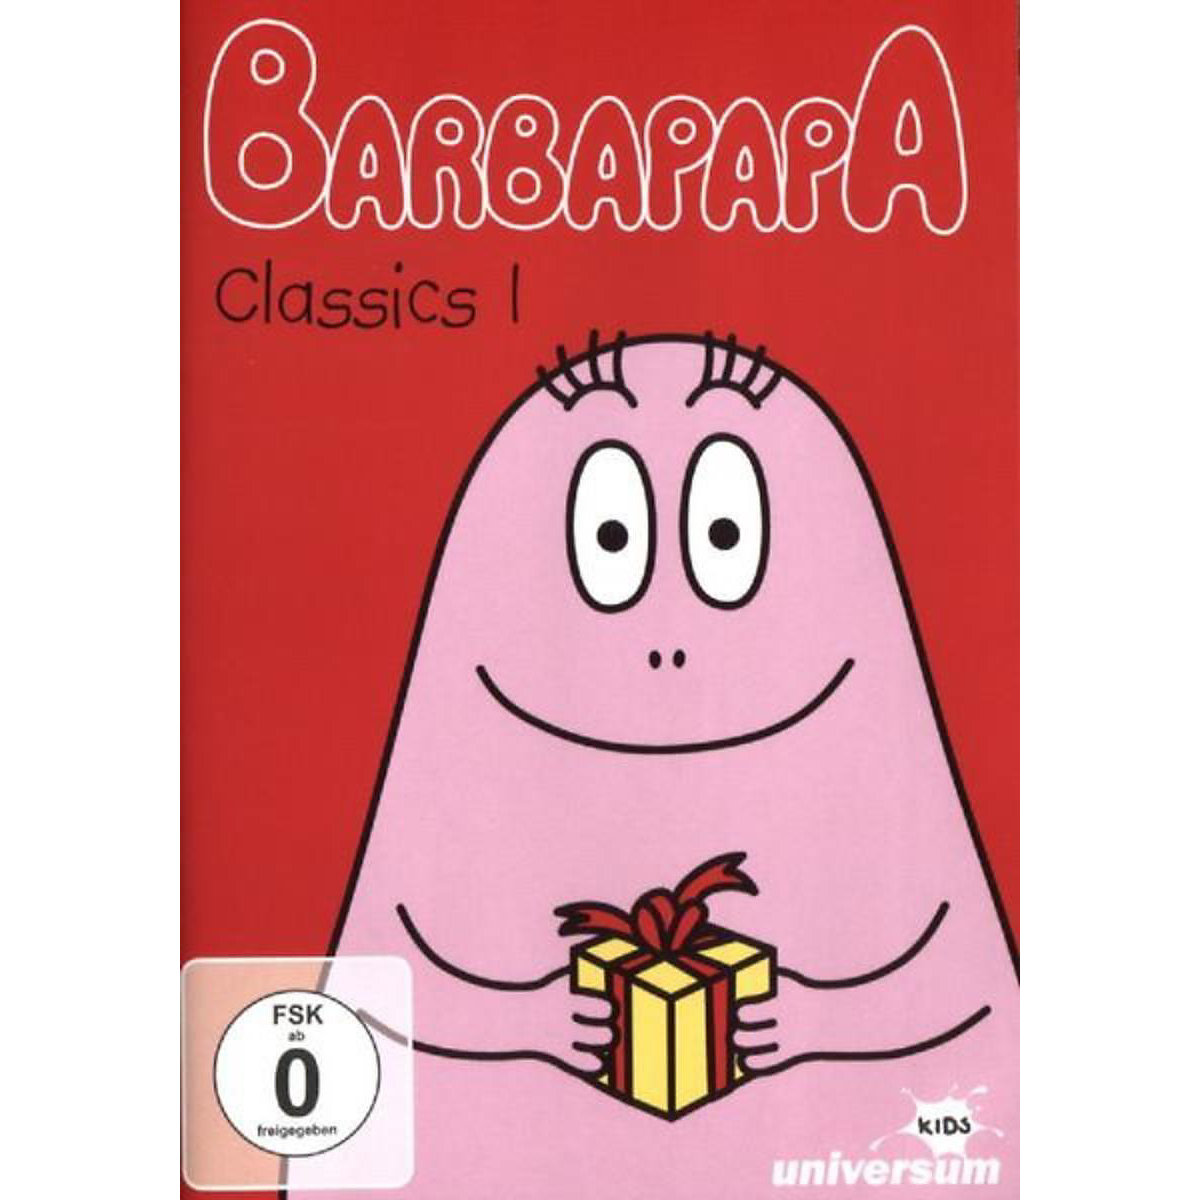 DVD Barbapapa Classics 01 Folge 1 30